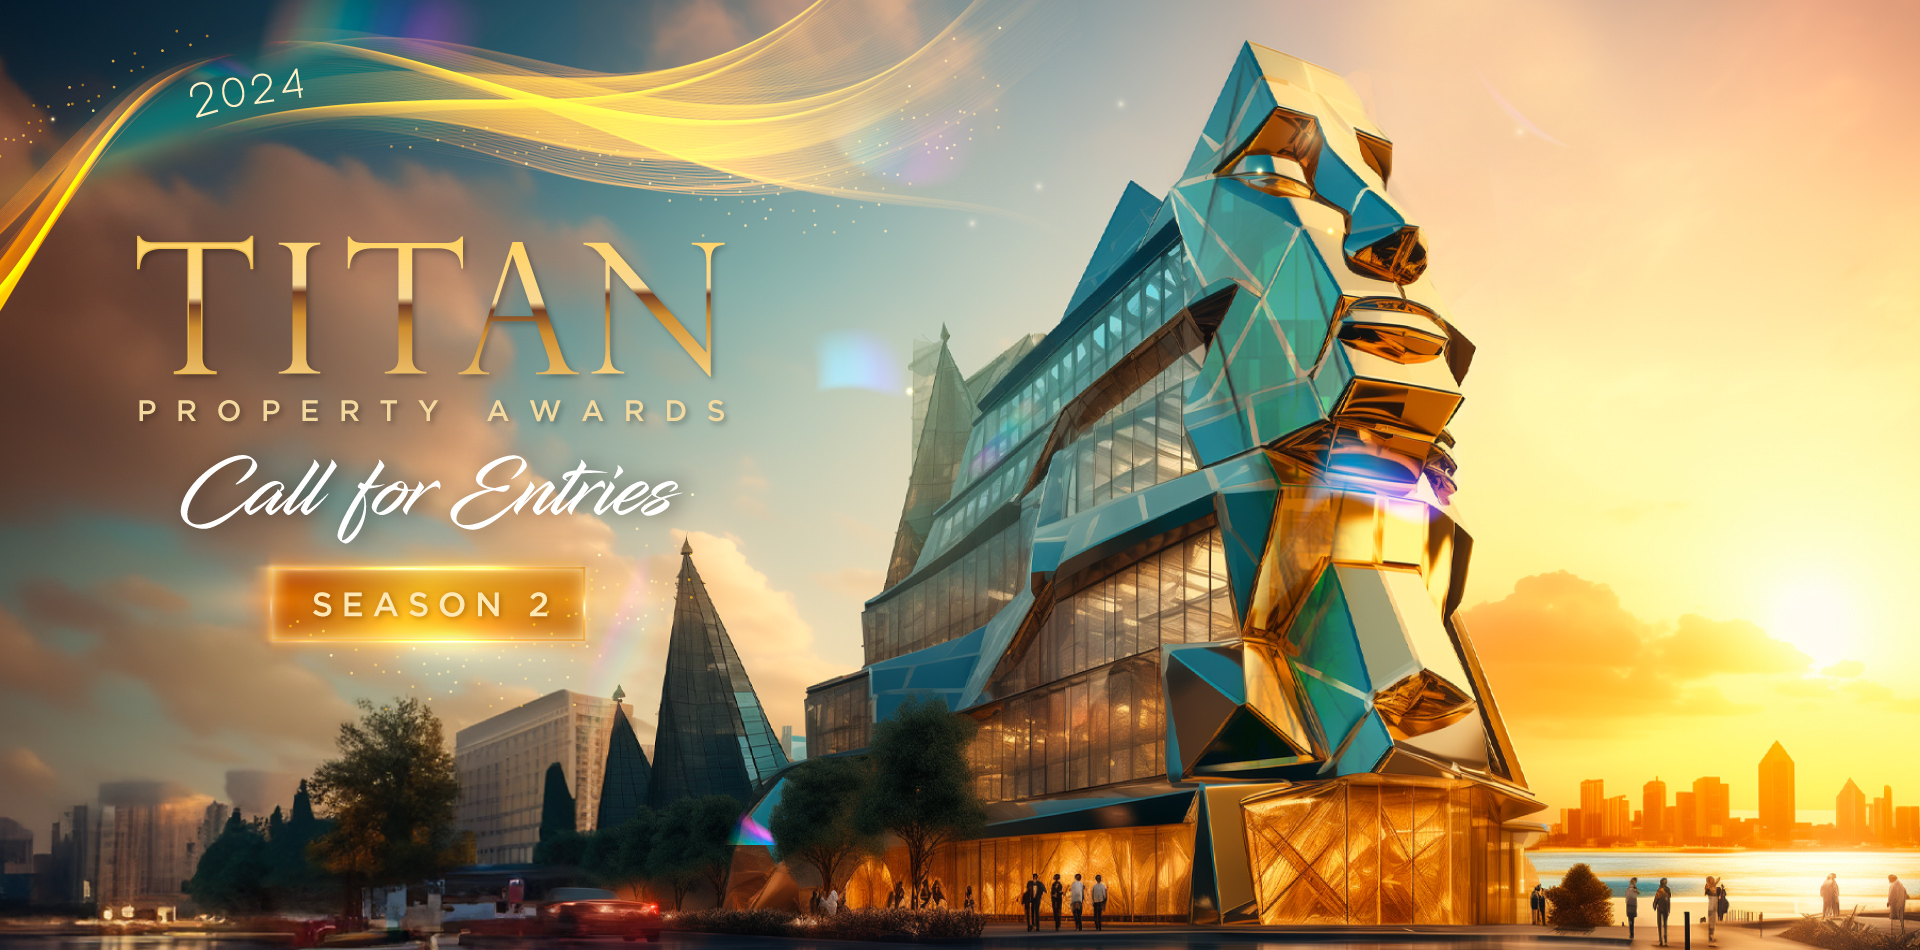 TITAN Property Awards 2024 Call For Entries: S2